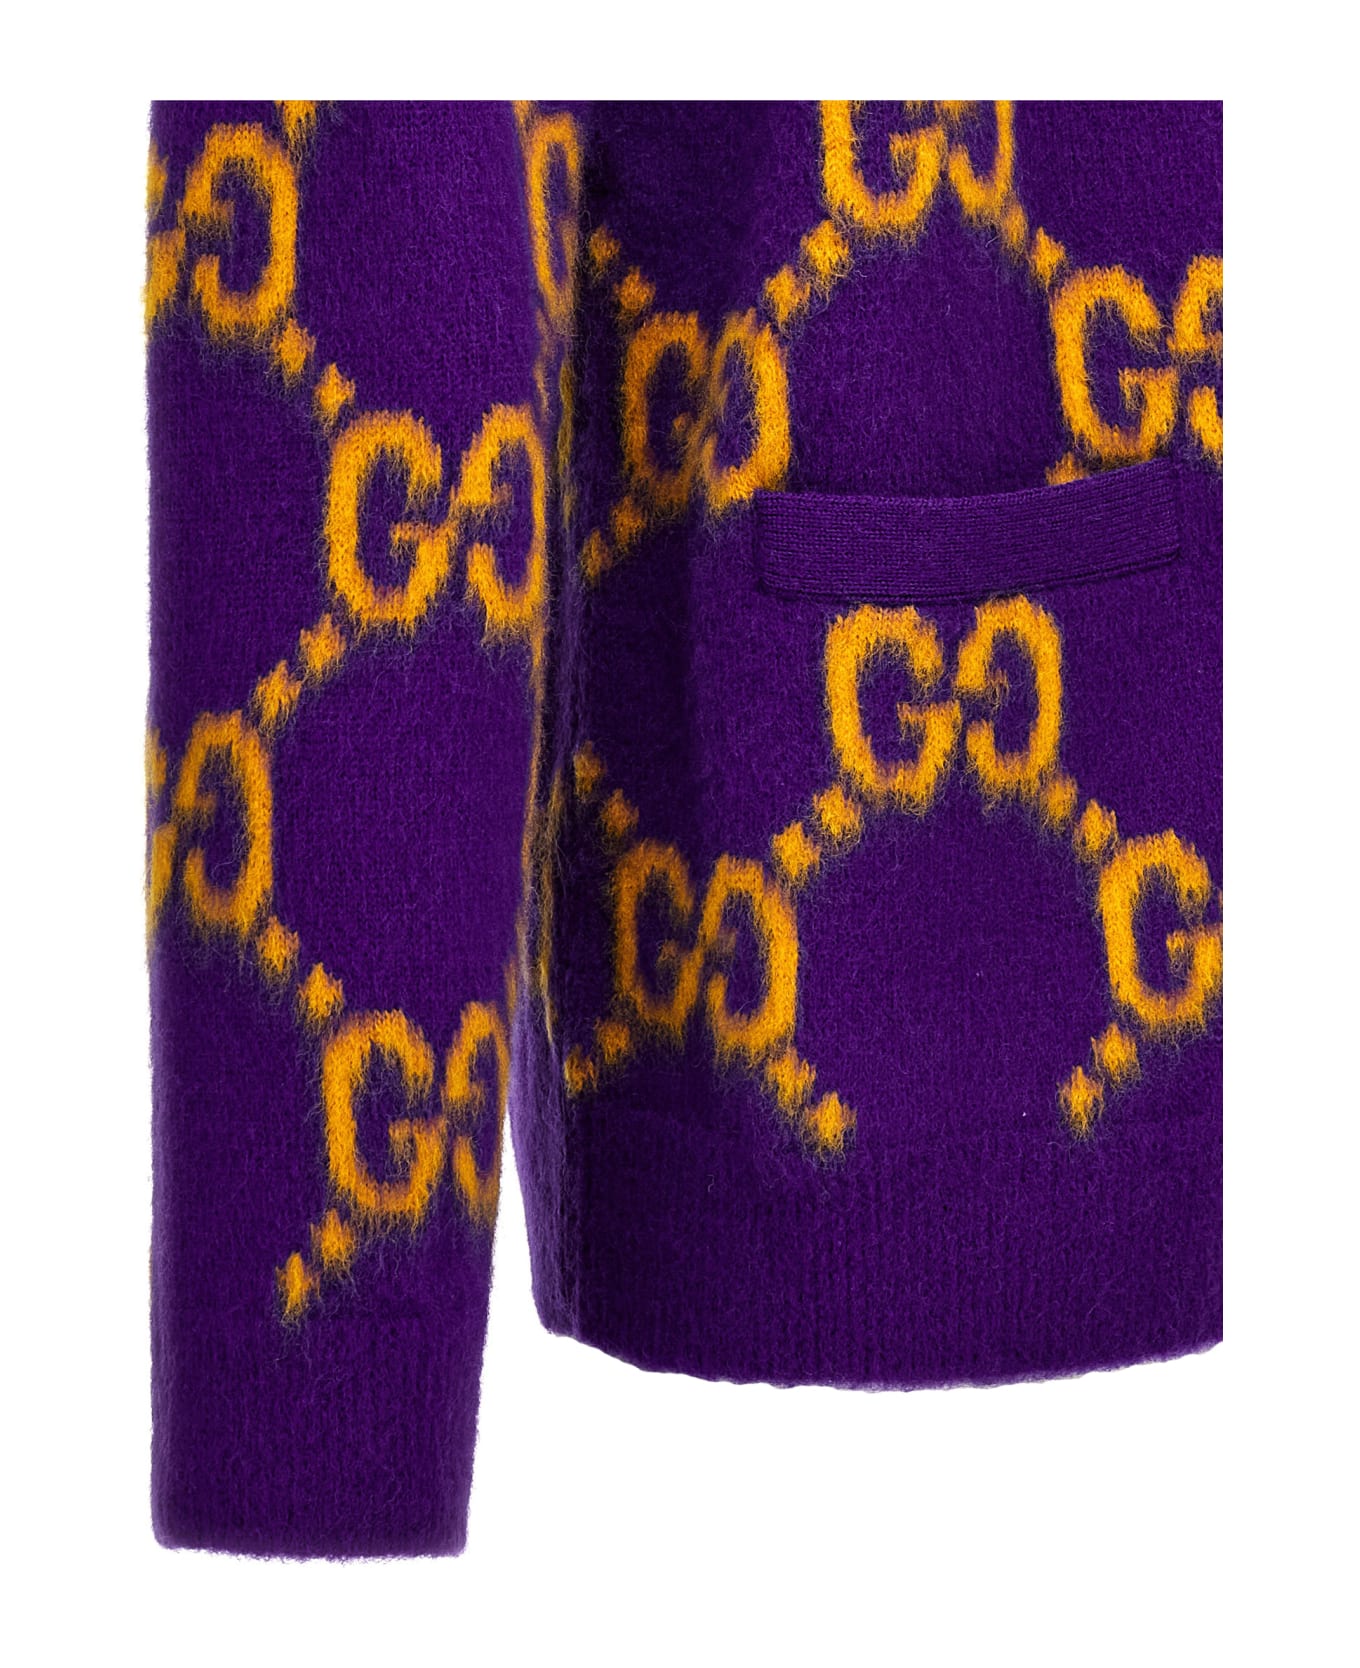 Gucci Logo Cardigan - Purple